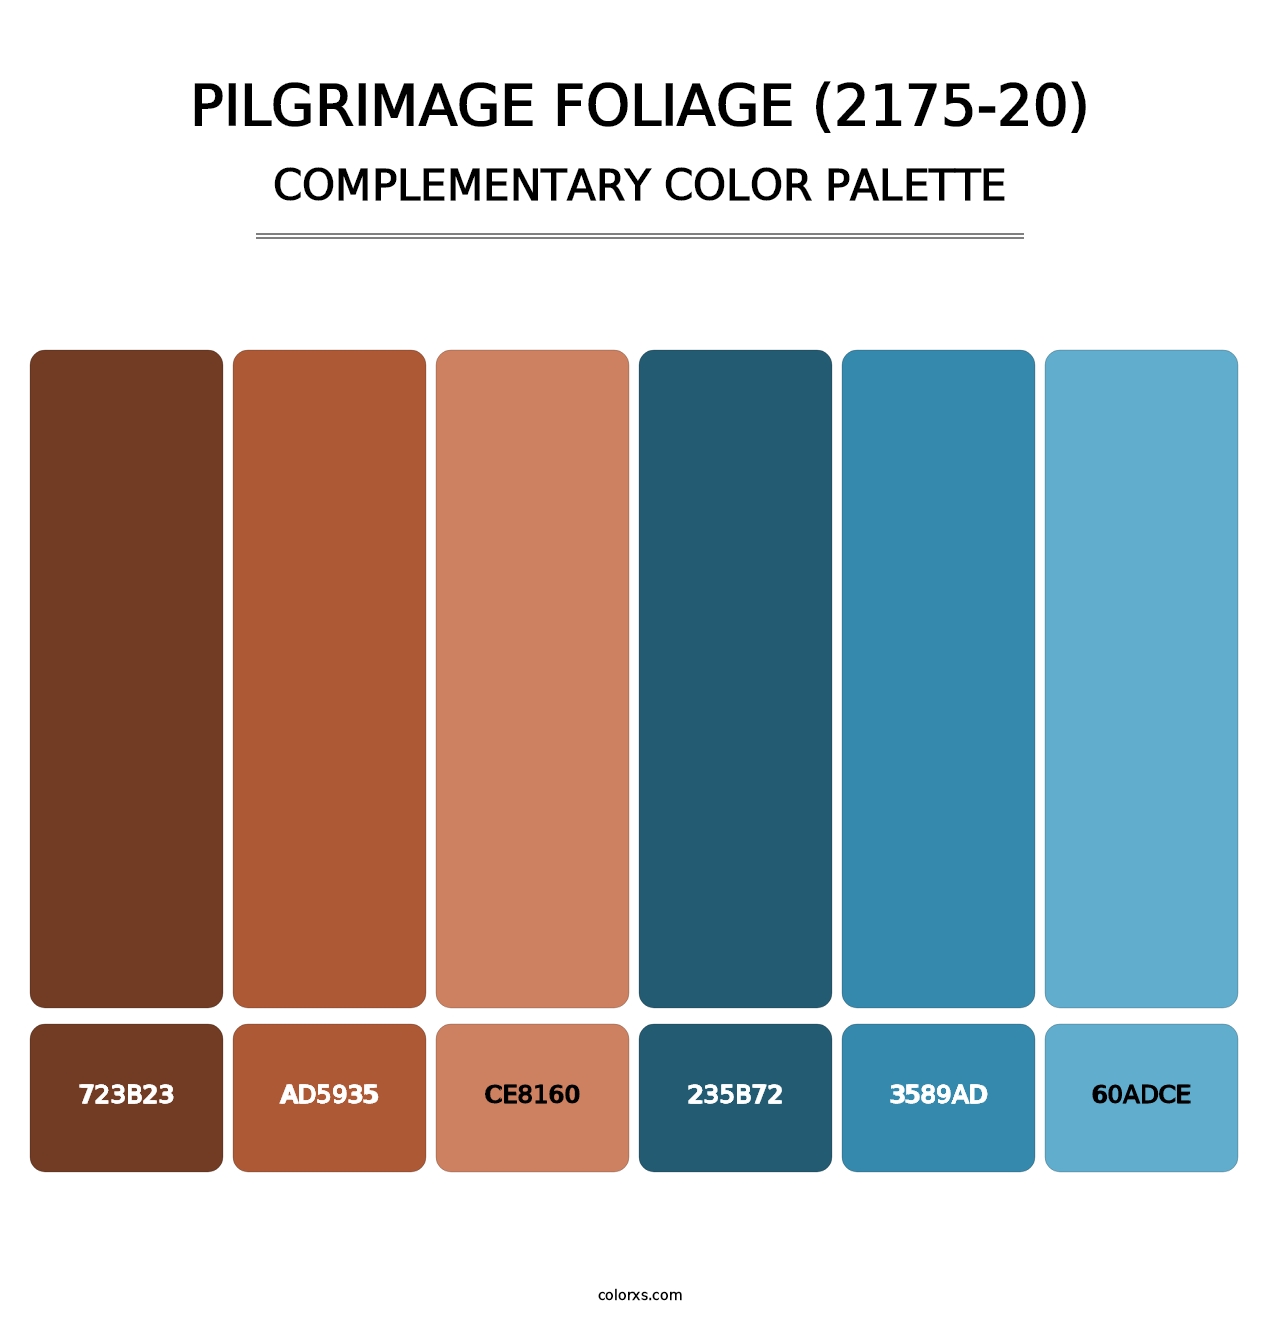 Pilgrimage Foliage (2175-20) - Complementary Color Palette